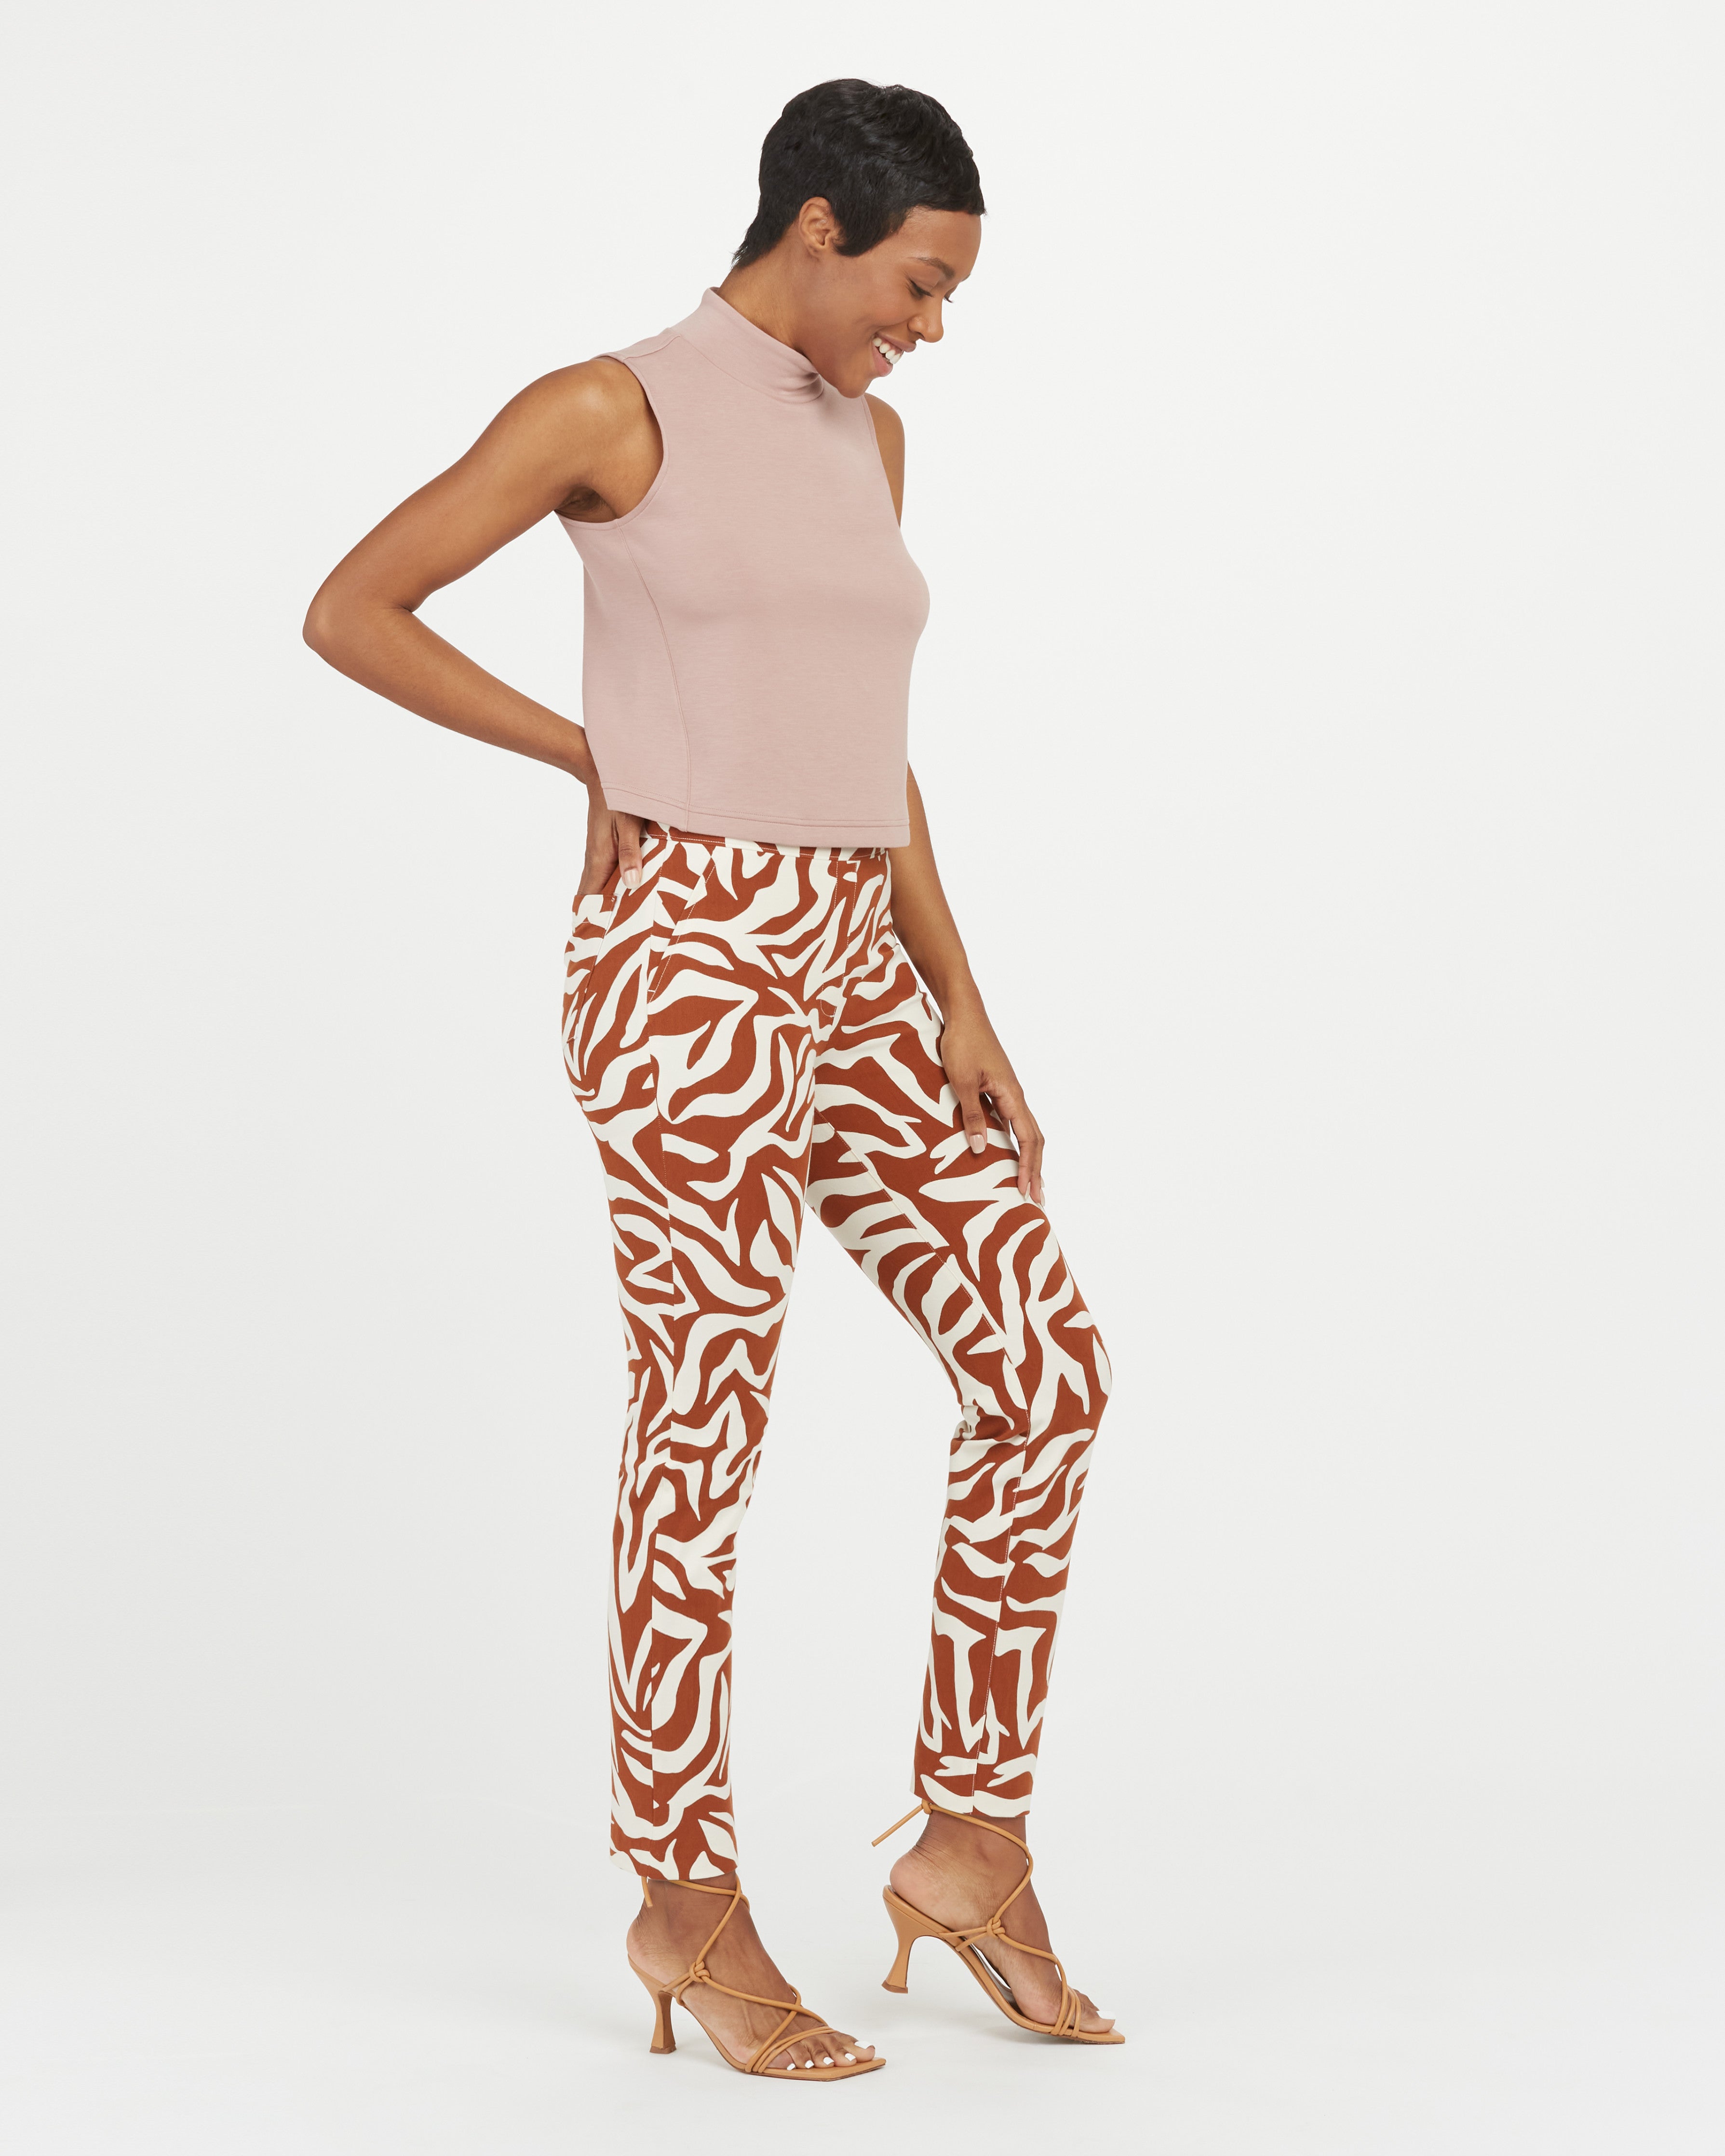 NWT Spanx Polished On the Go Zebra Print Women's Shorts Size 2X Cream Brown